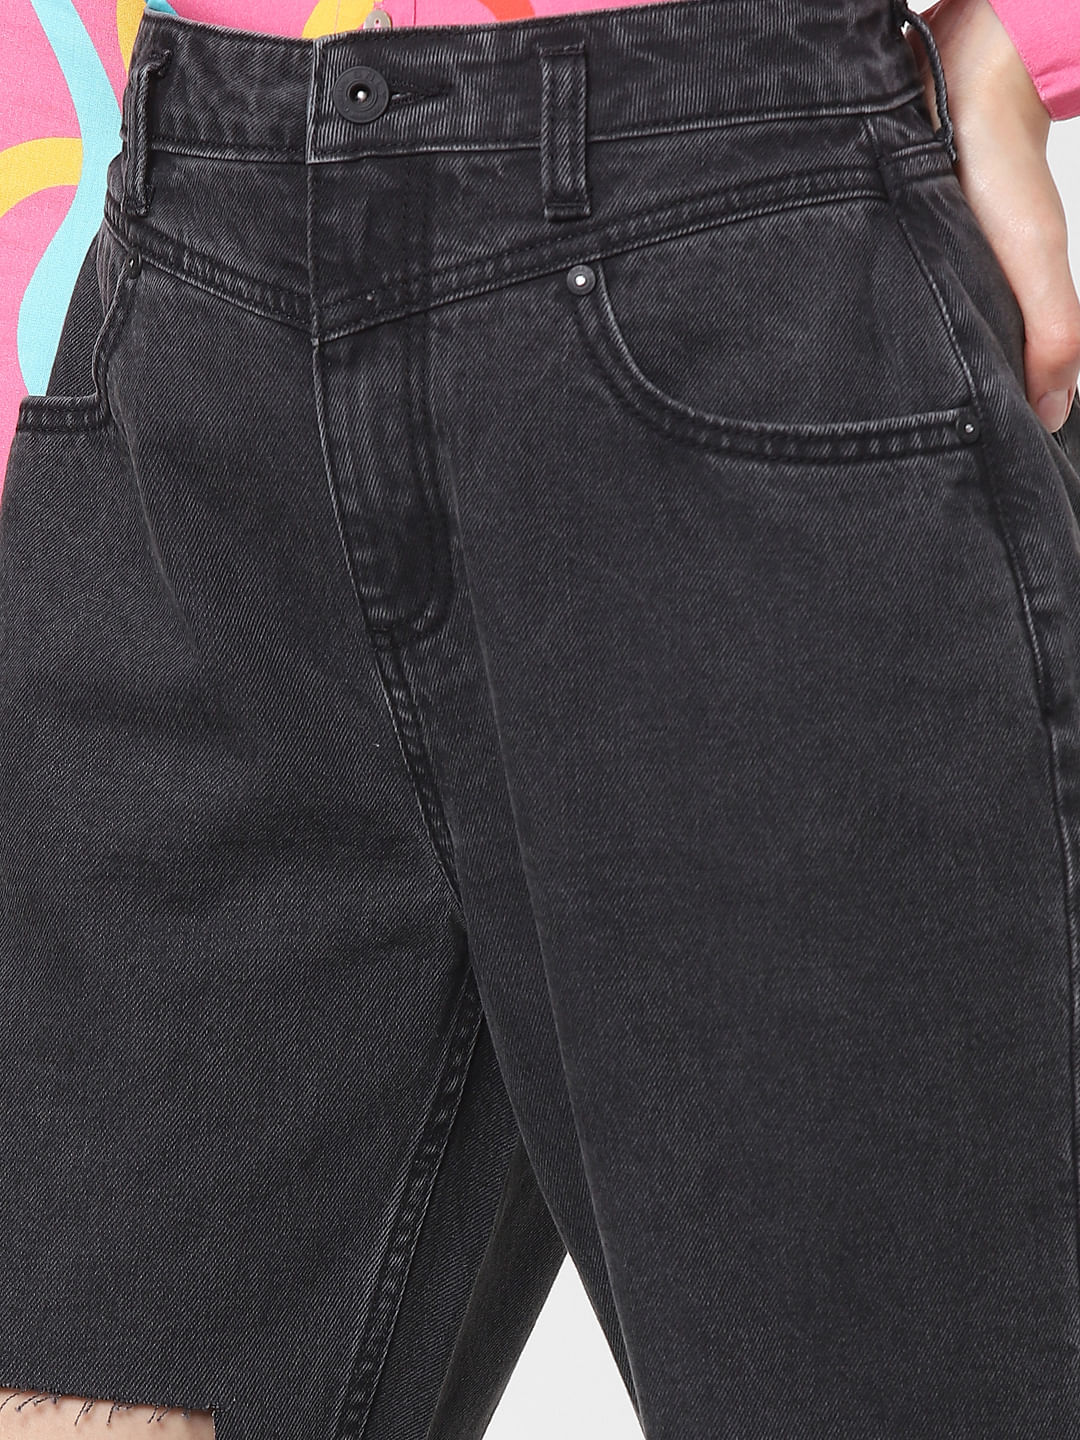 Women Black Denim Front Patch Pocket Jeans